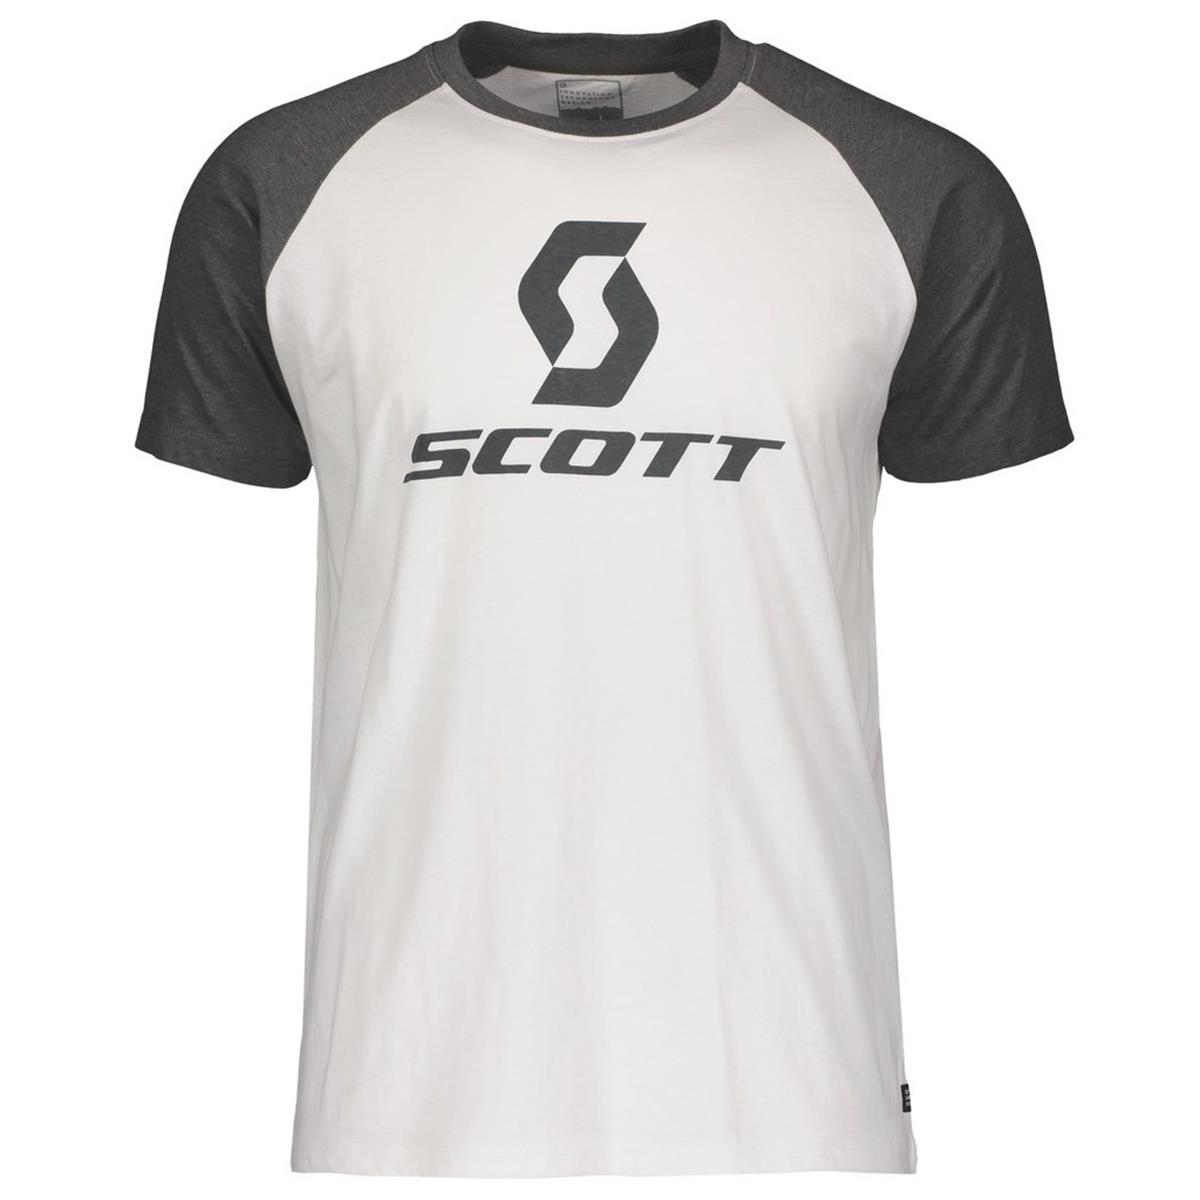 Scott T-Shirt 10 Icon Raglan White/Dark Grey Melang